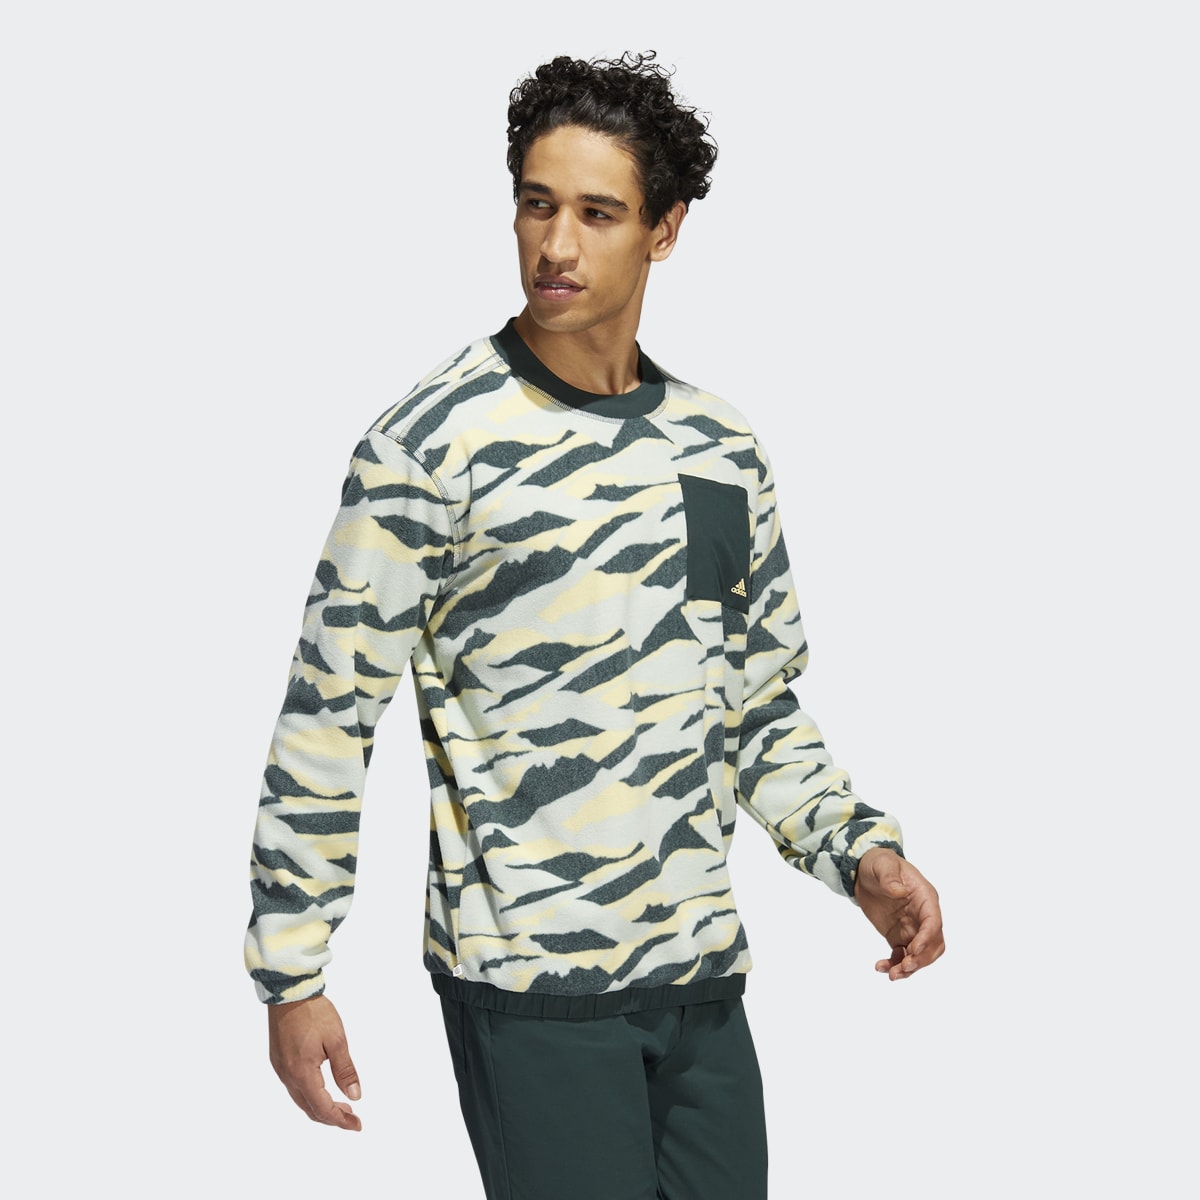 Adidas Texture-Print Sweatshirt. 4